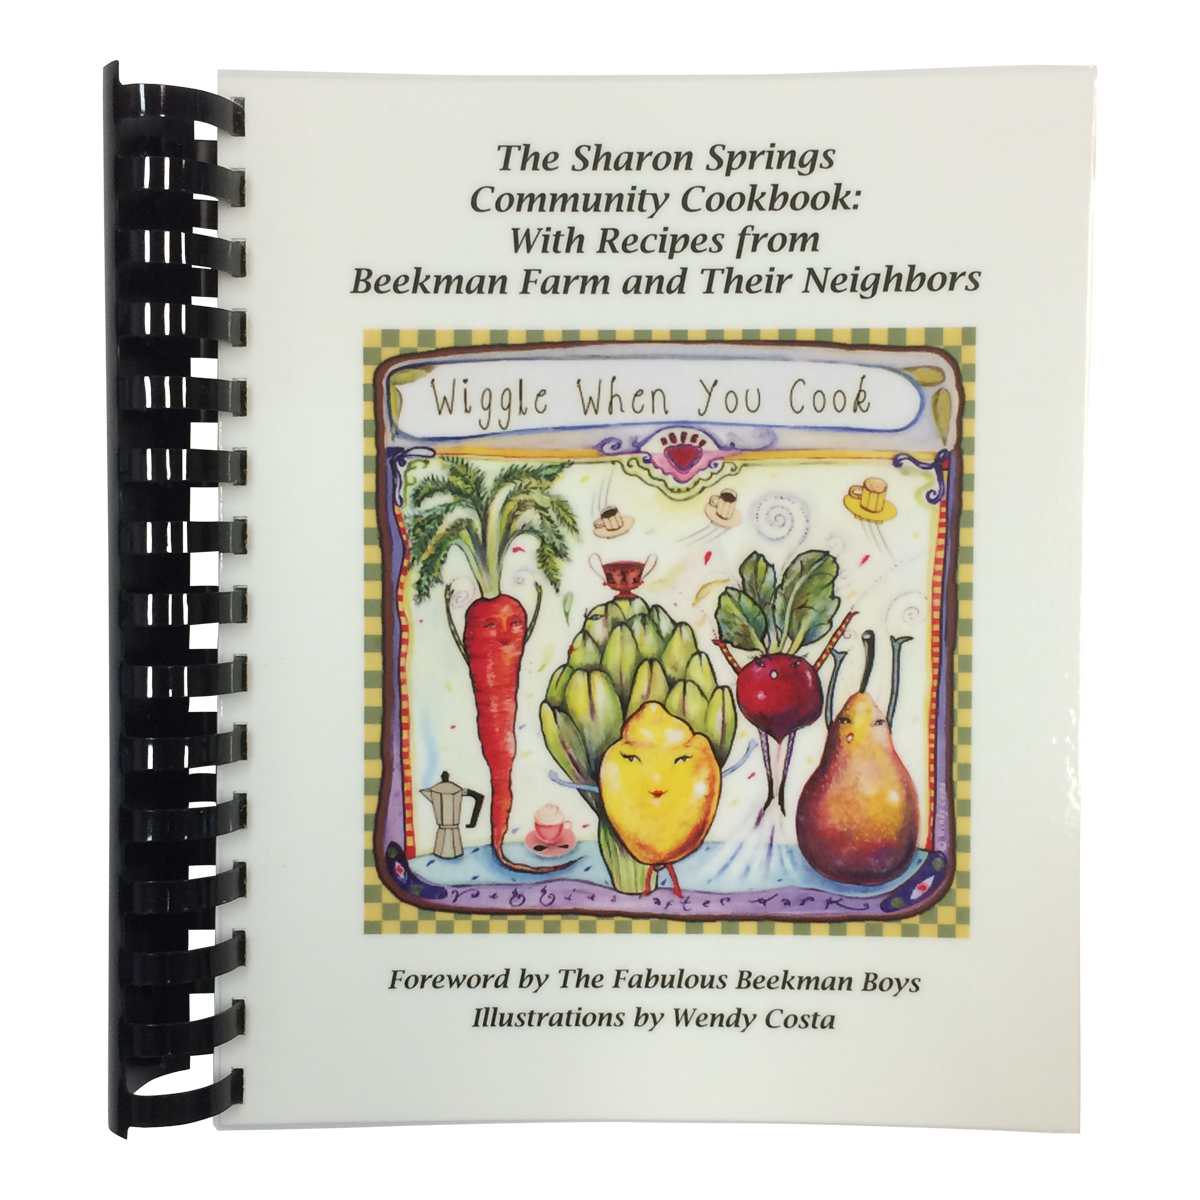 The Sharon Springs Community Cookbook